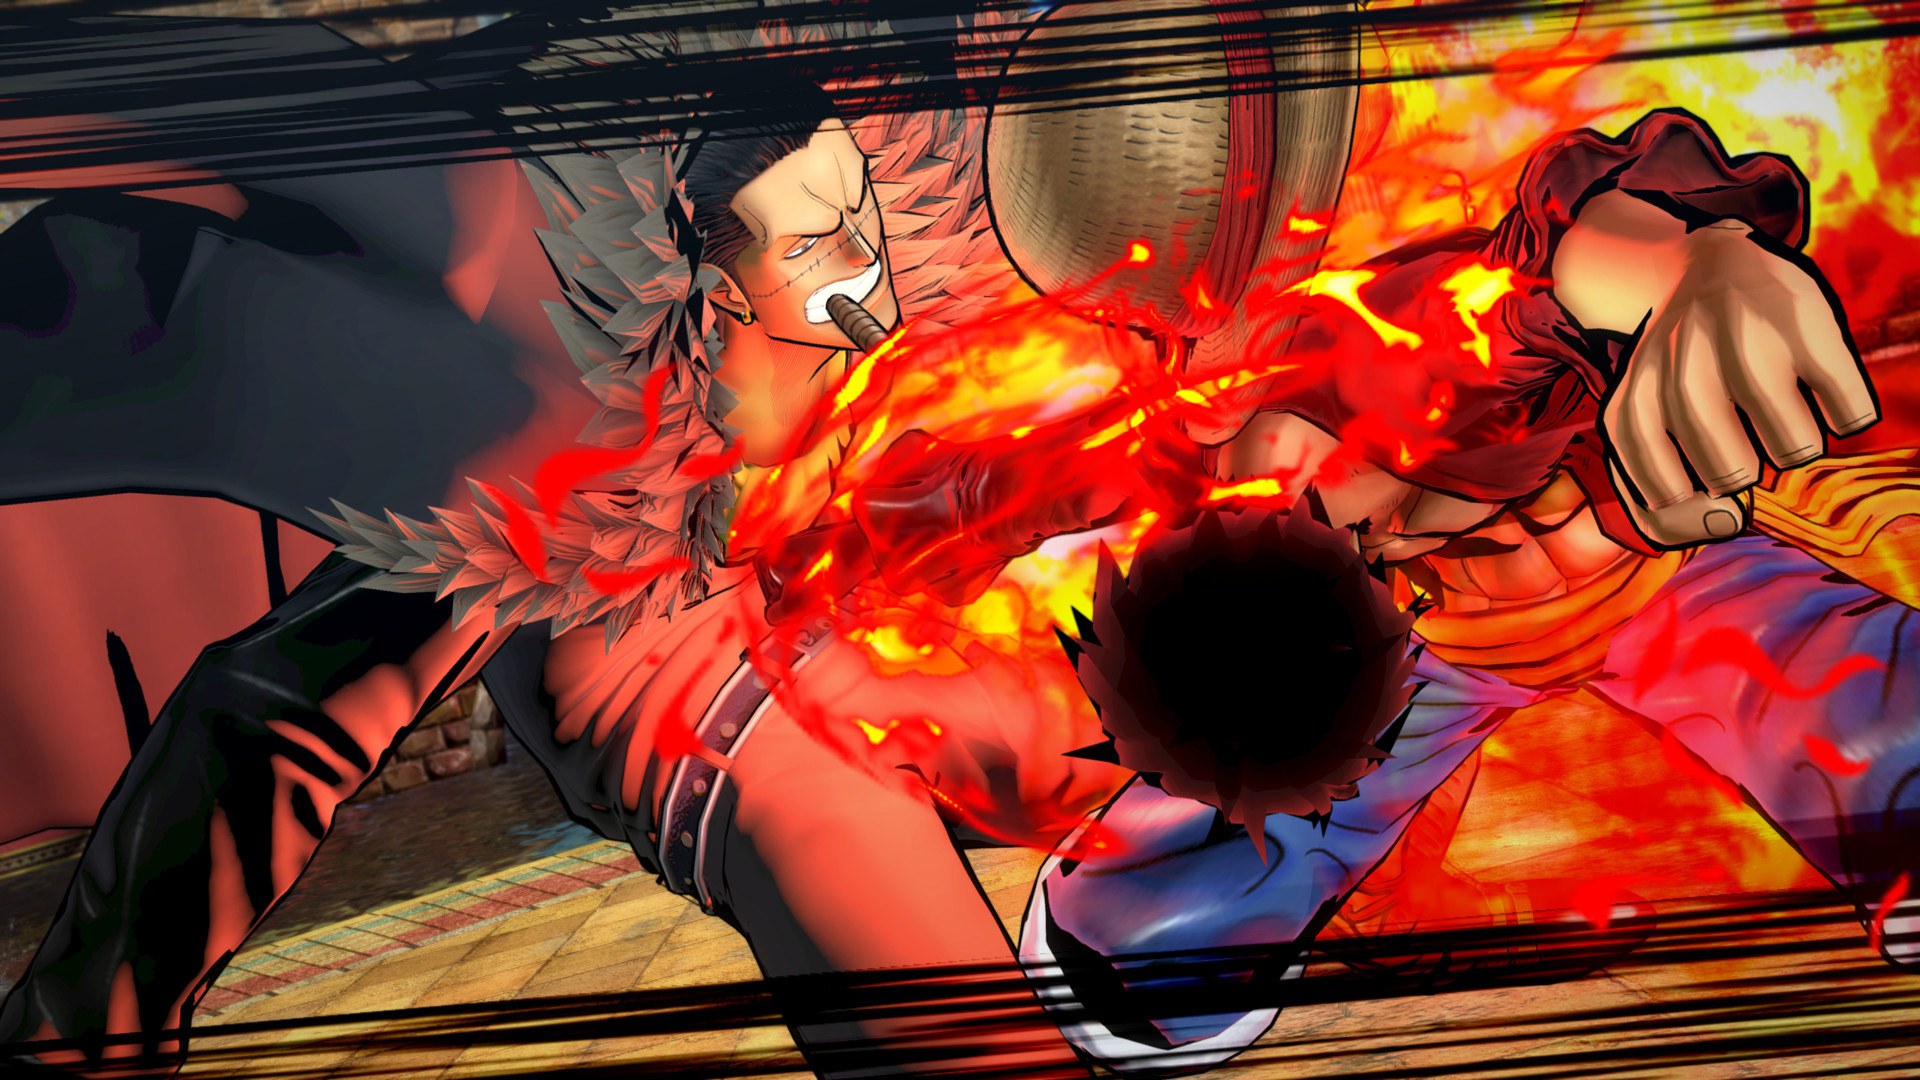 One Piece Burning Blood Steam Screenshots 03